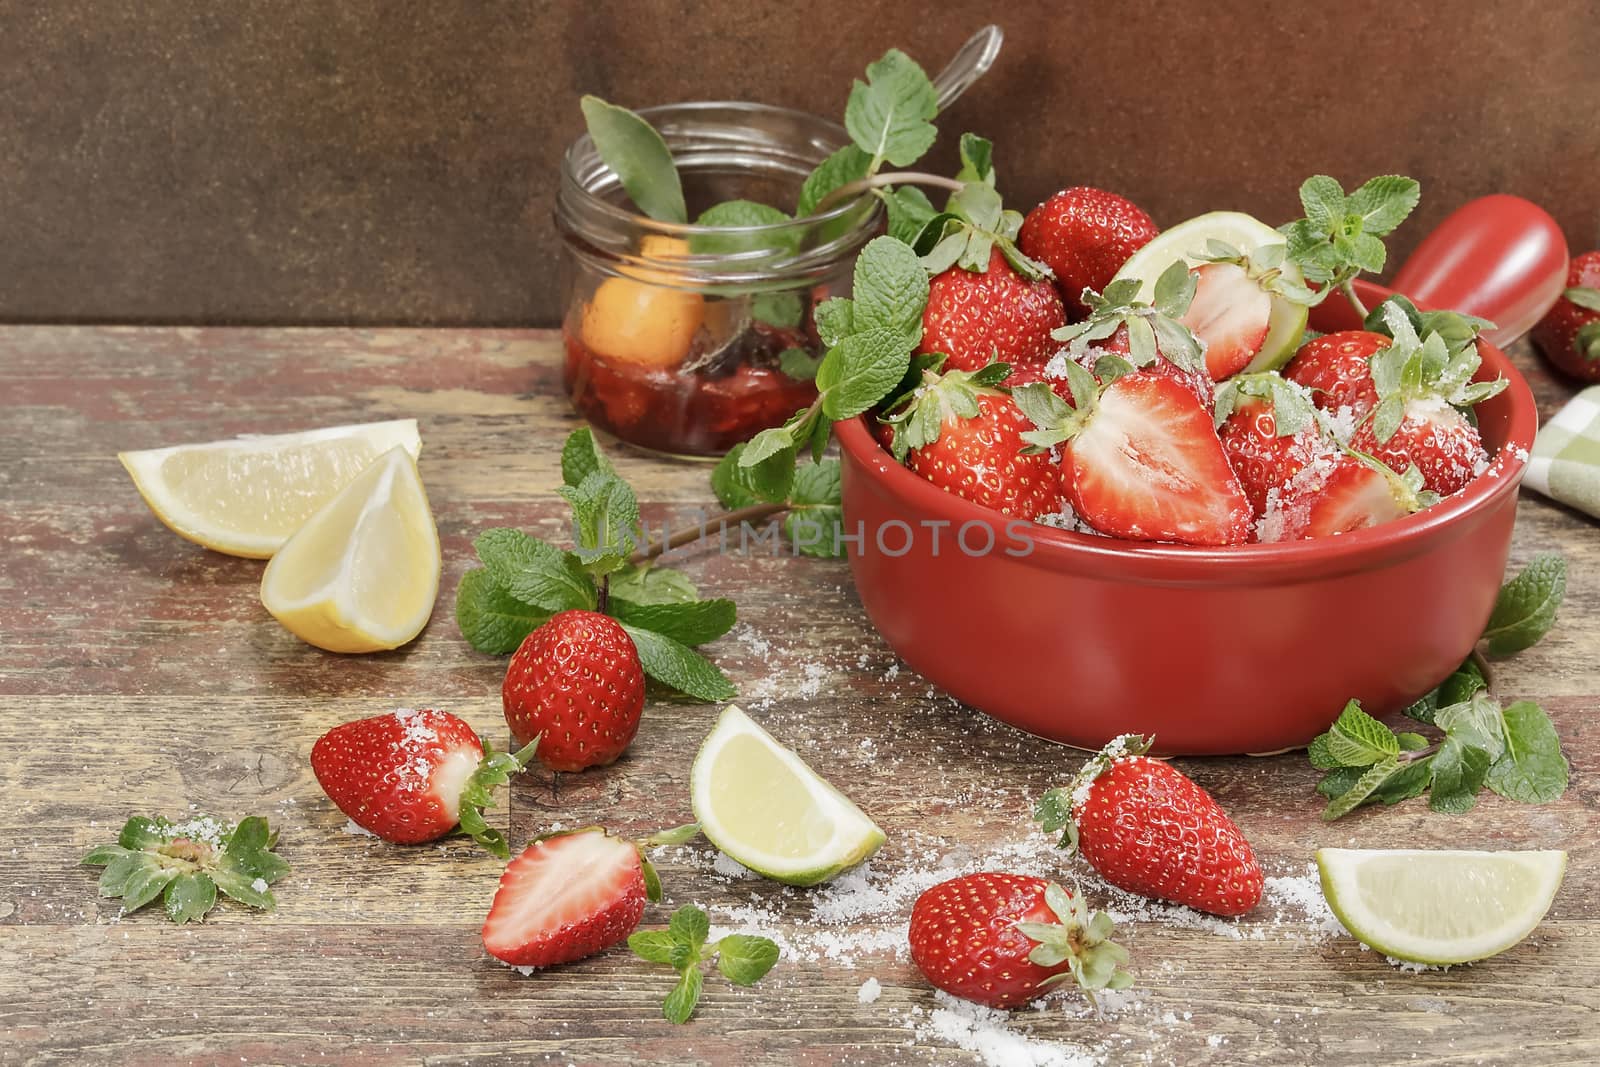 Making strawberry jam by Slast20